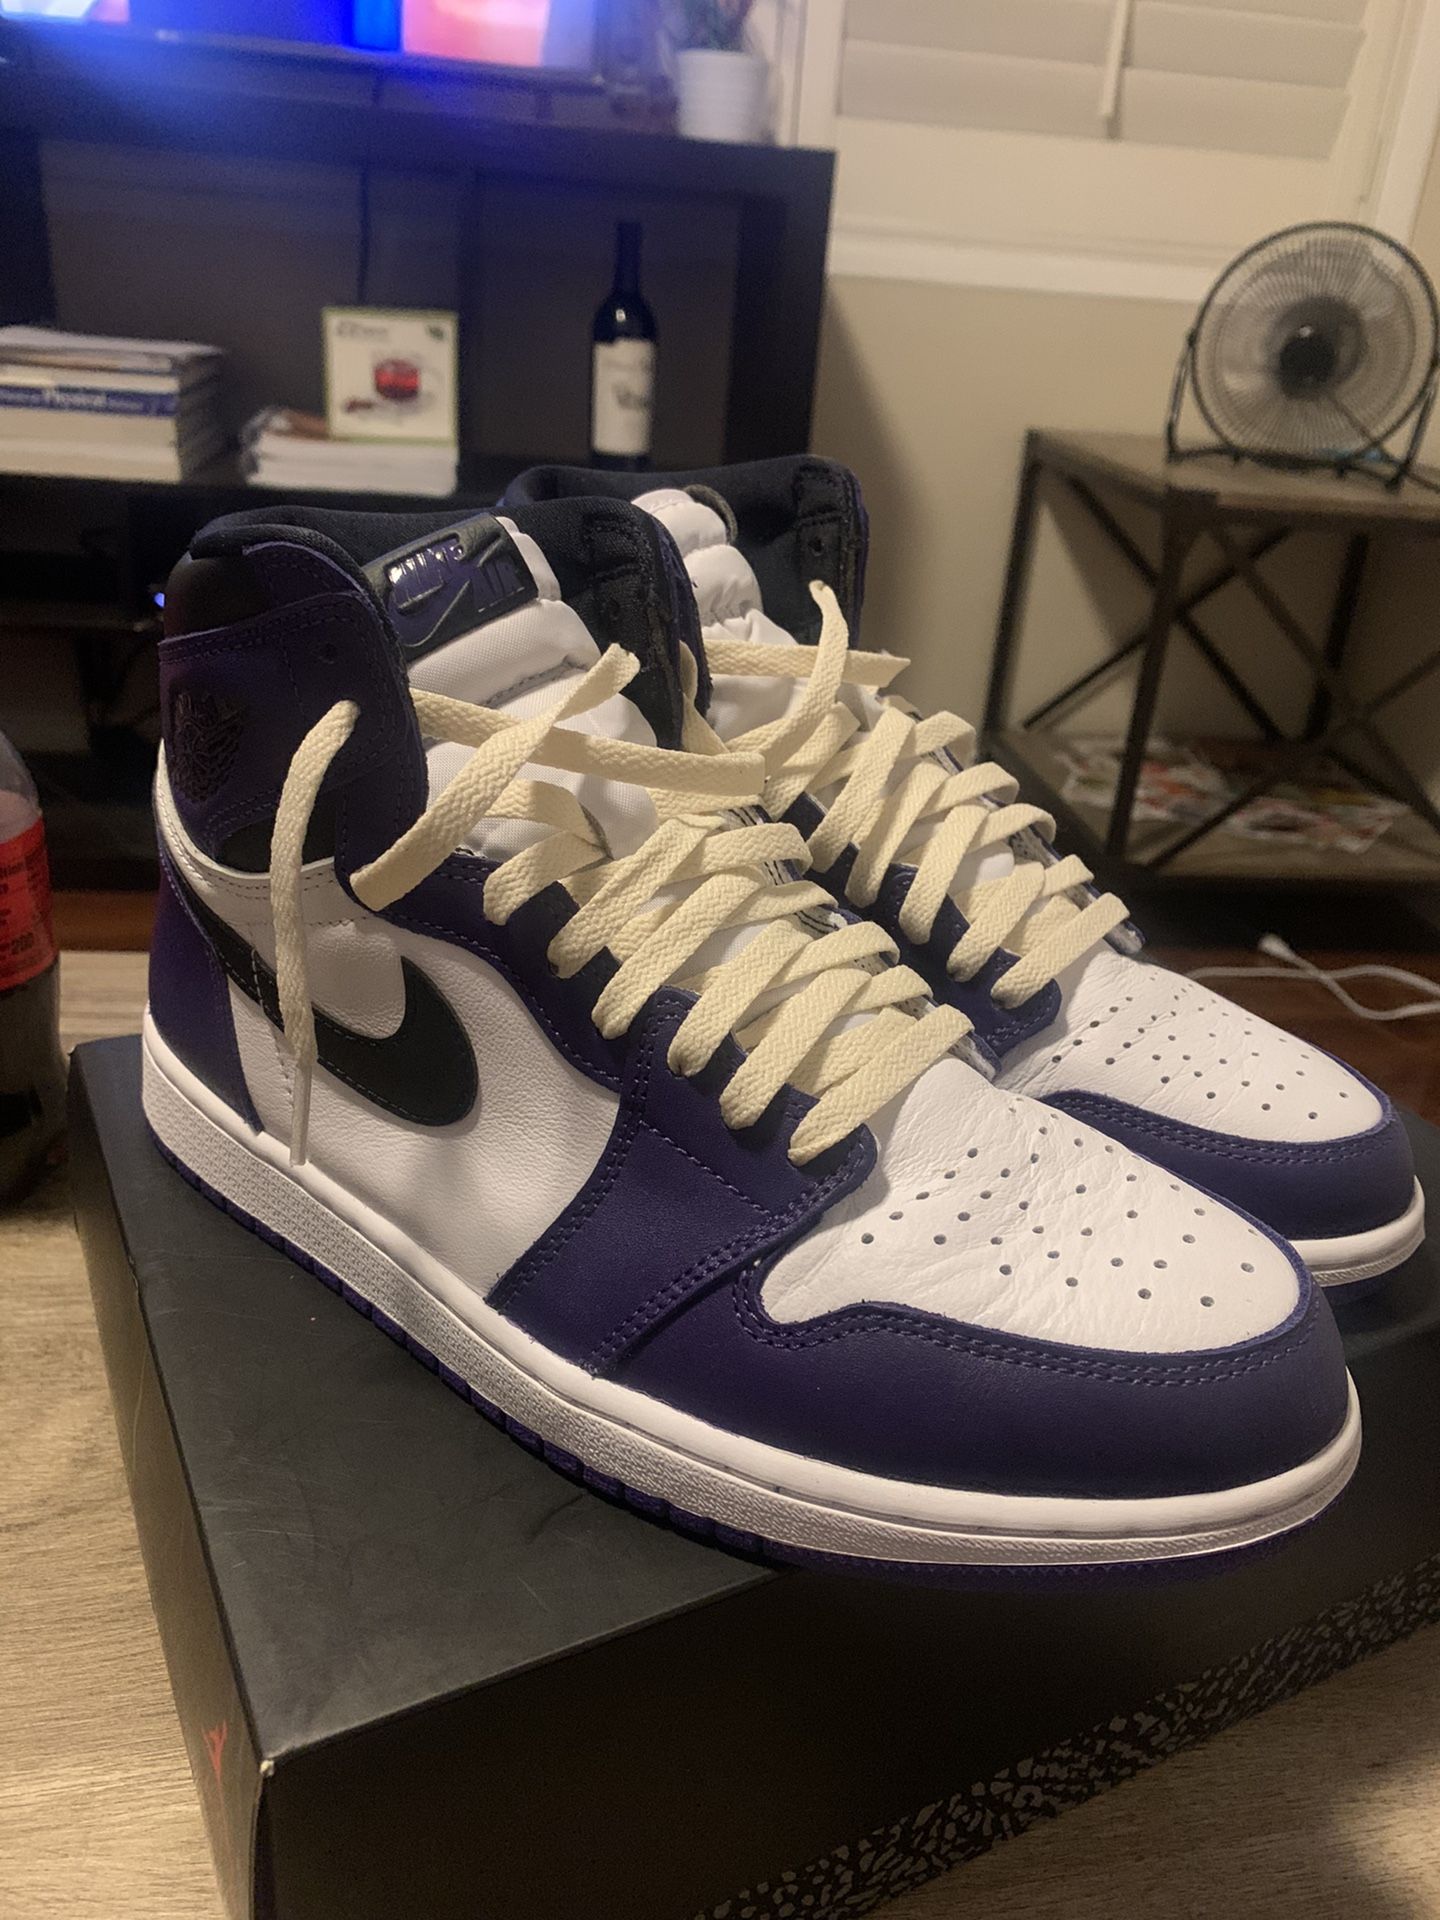 Jordan 1 court purple size 10.5